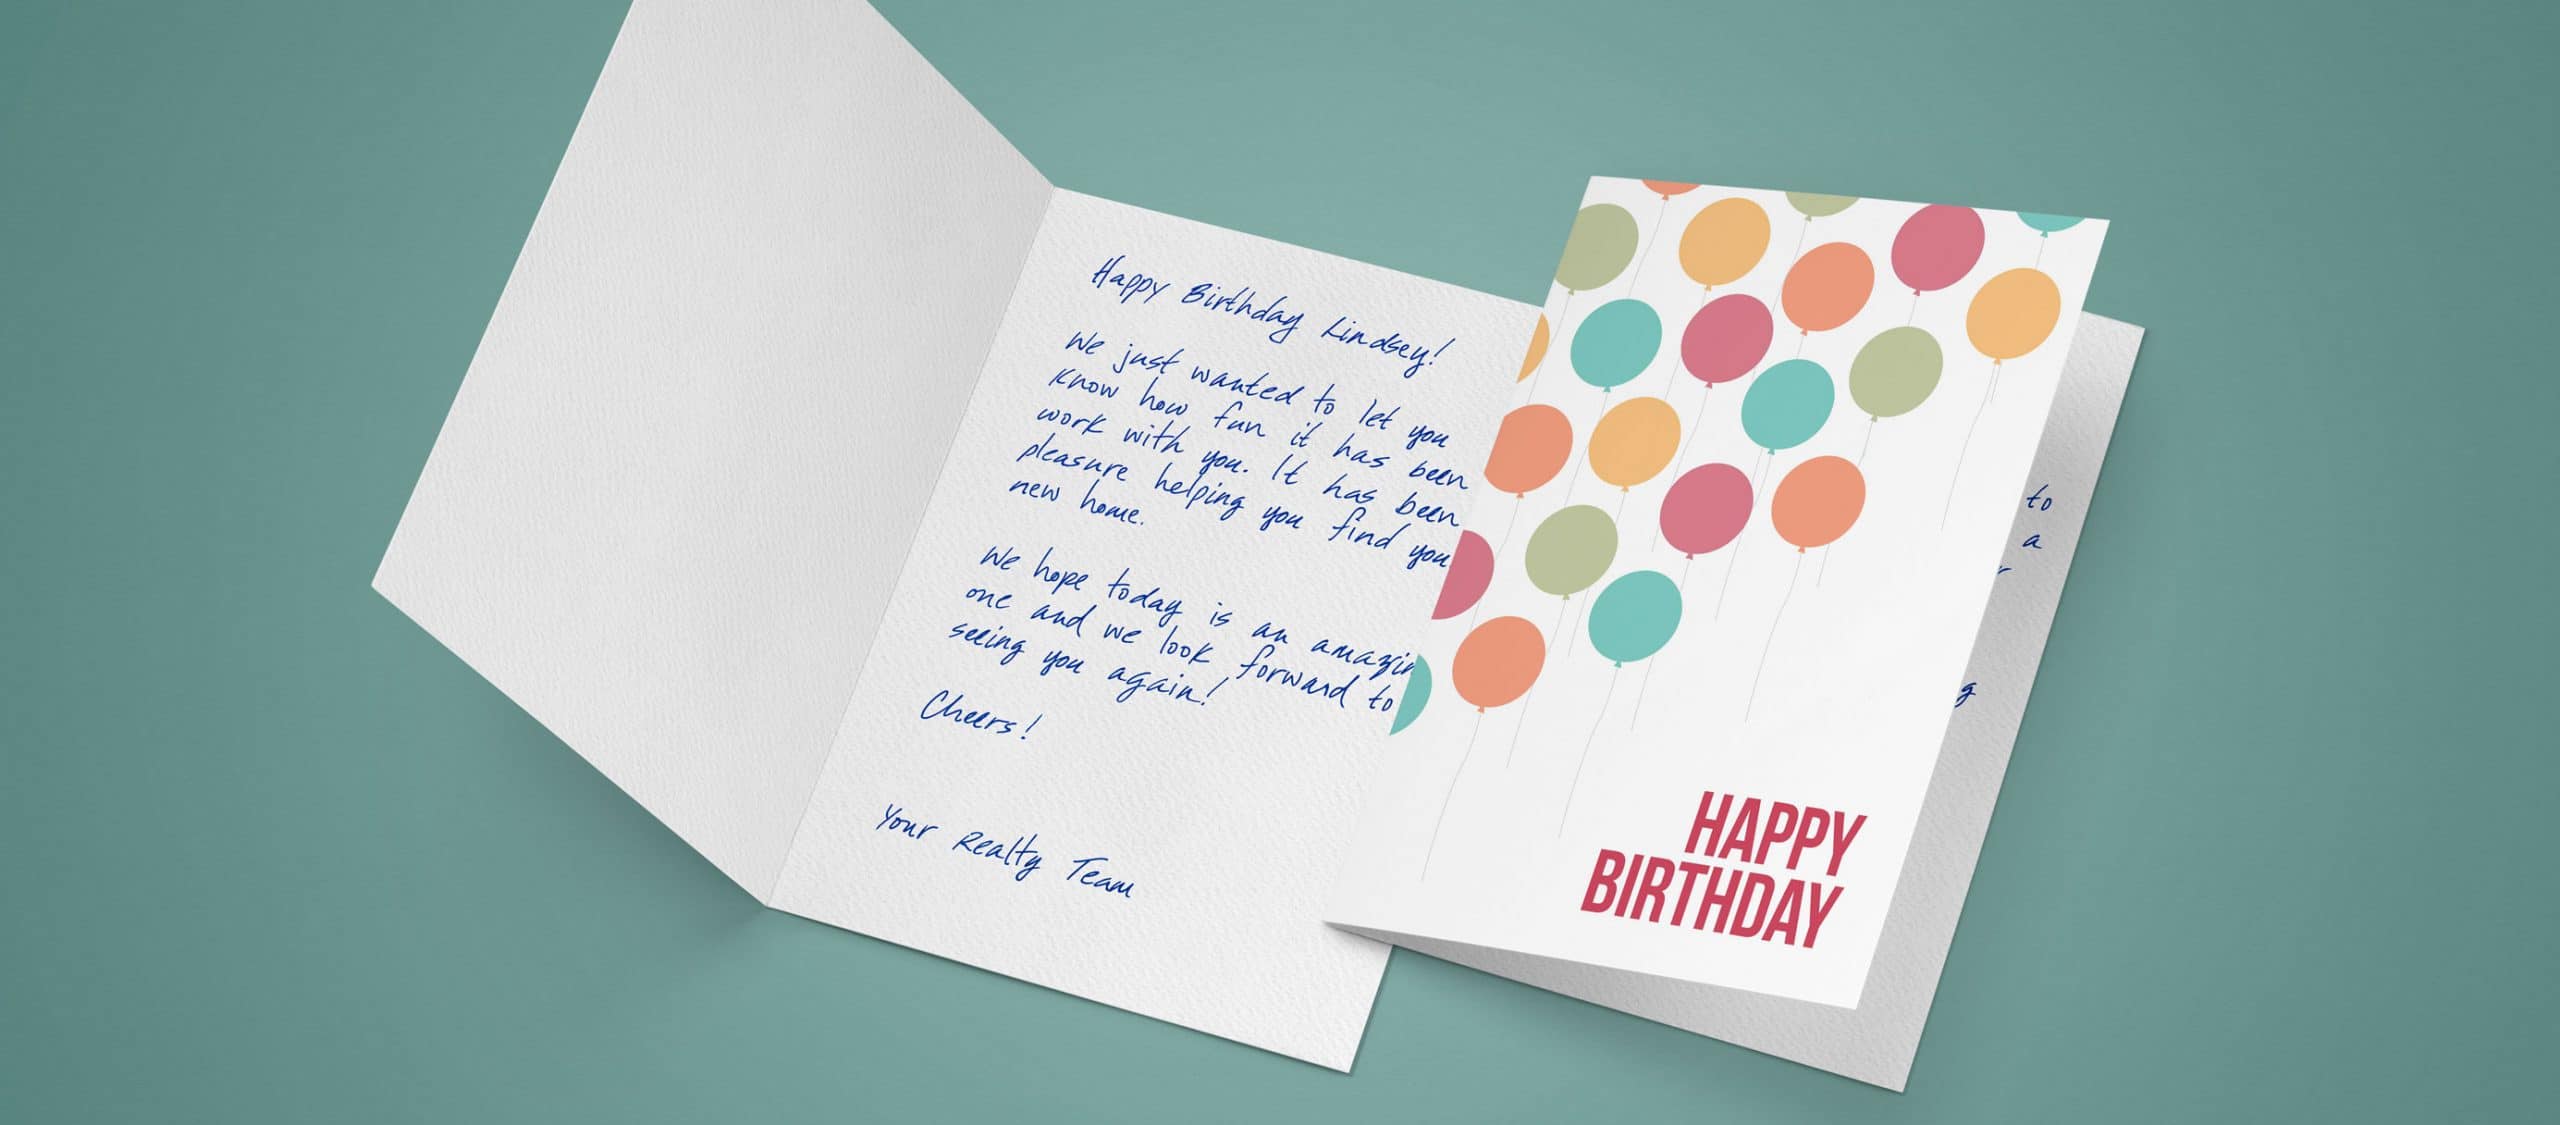 The Benefits of Sending Business Birthday Cards - Handwrytten